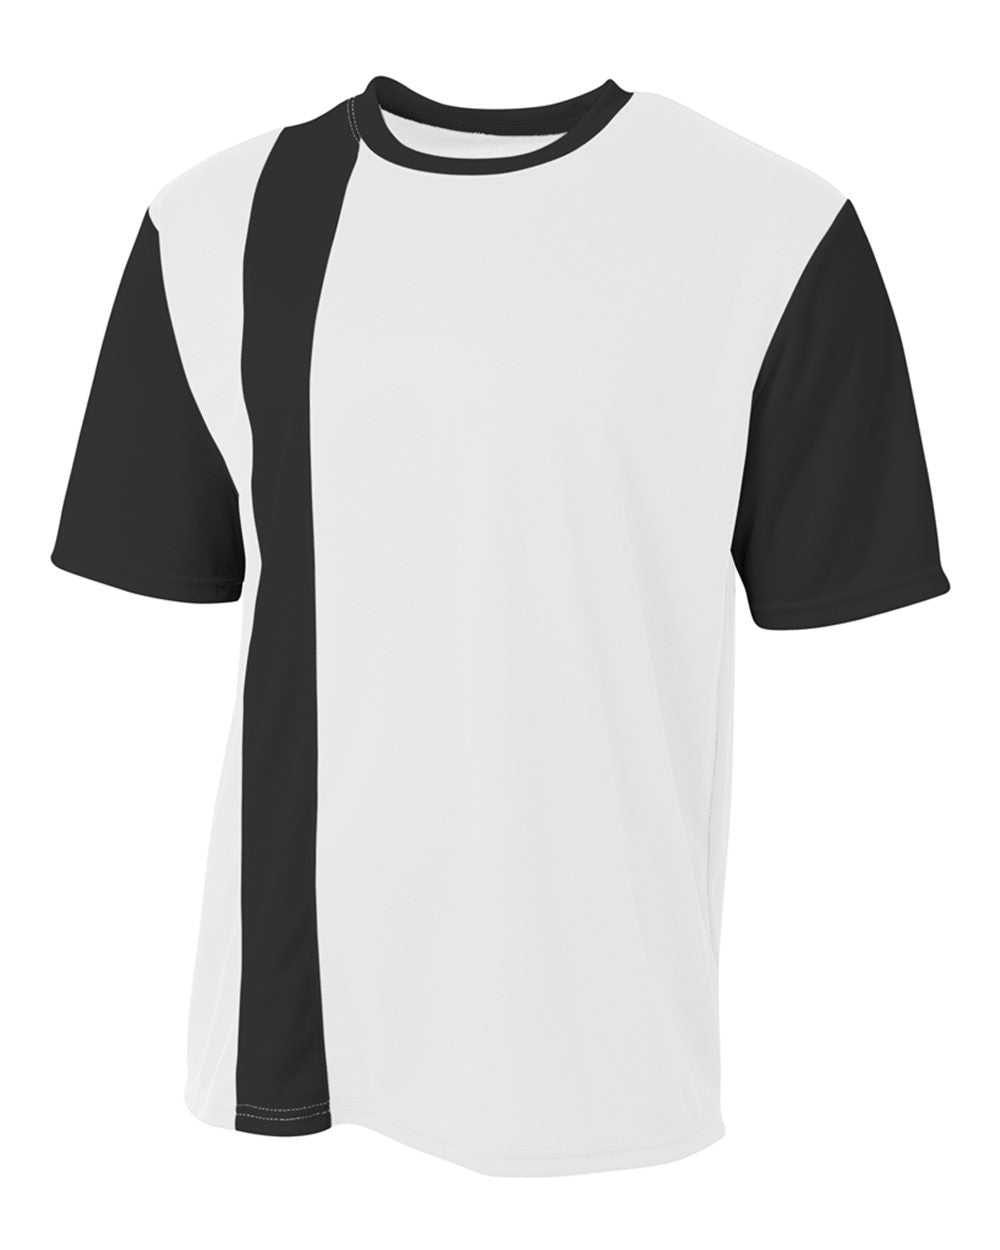 A4 NB3016 Legend Soccer Jersey - White Black - HIT a Double